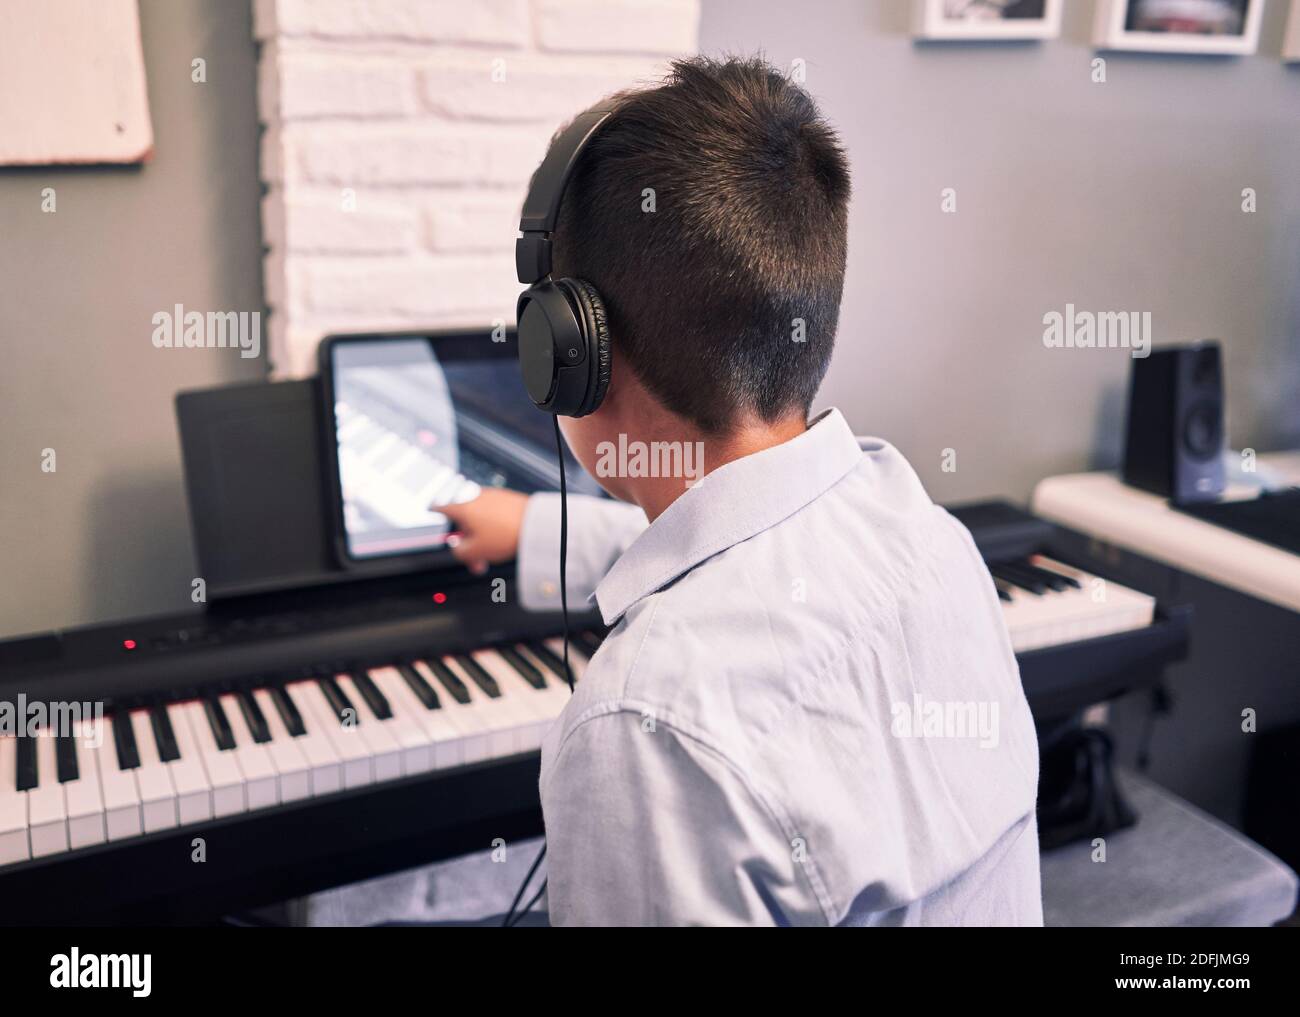 Child learning piano online lessons in quarantine . Coronavirus life style Stock Photo